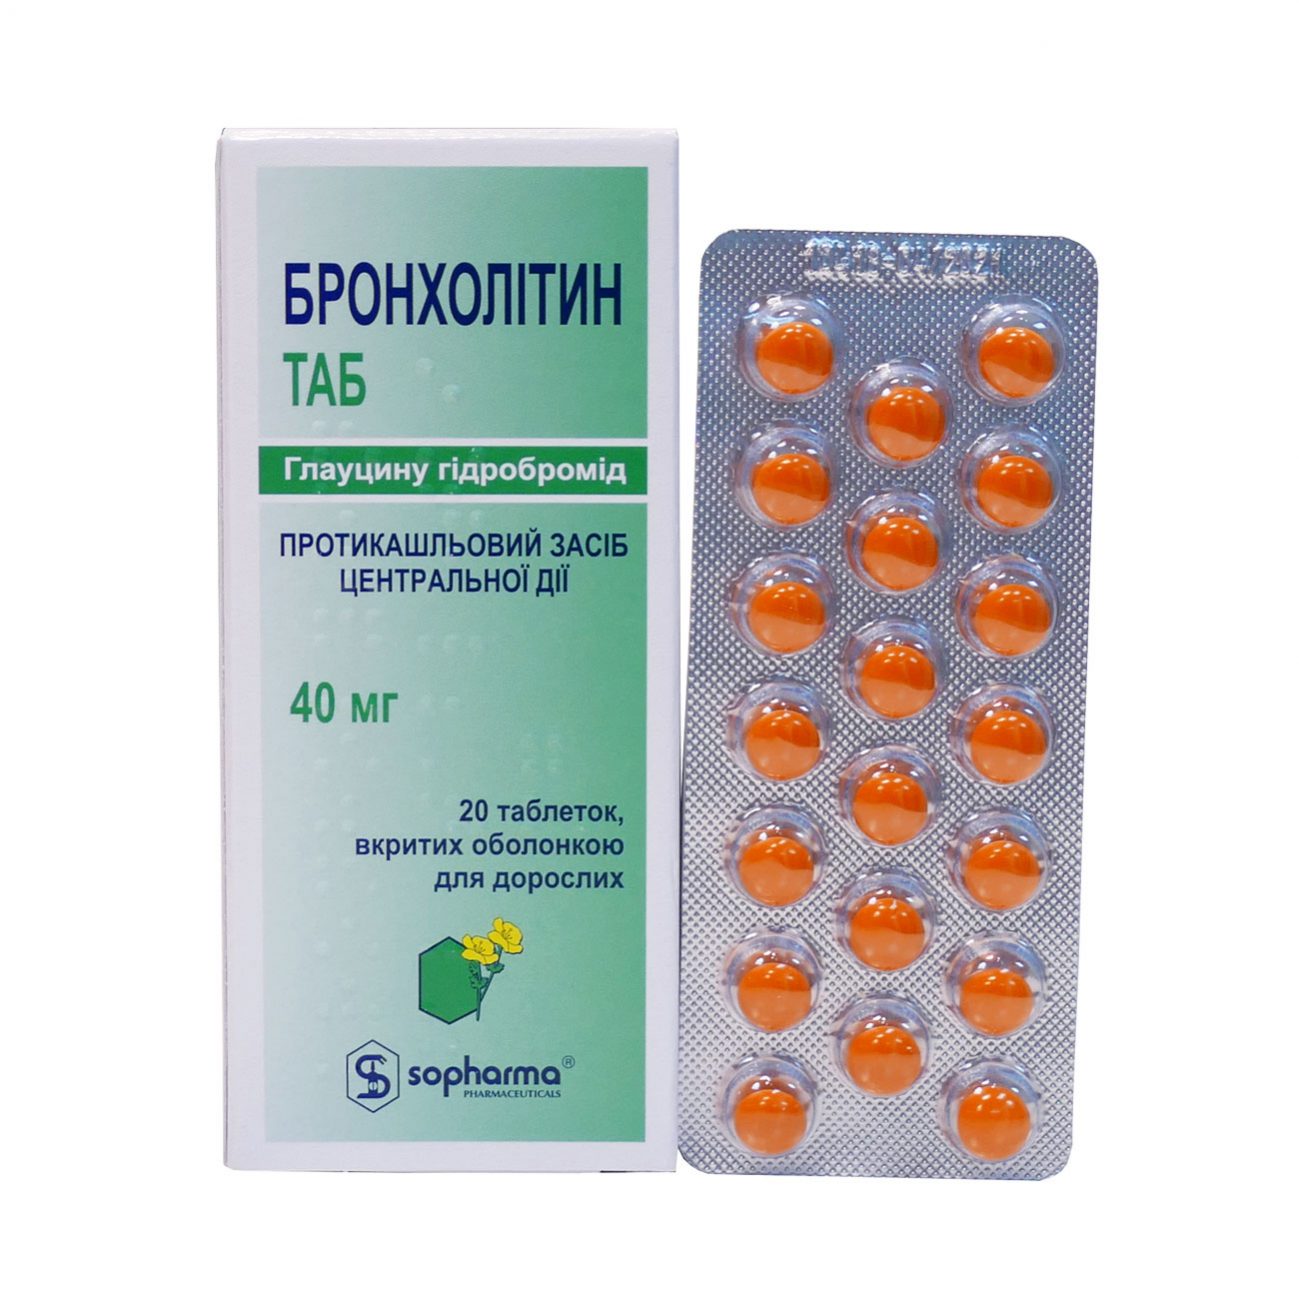 Бронхолитин: инструкция к препарату